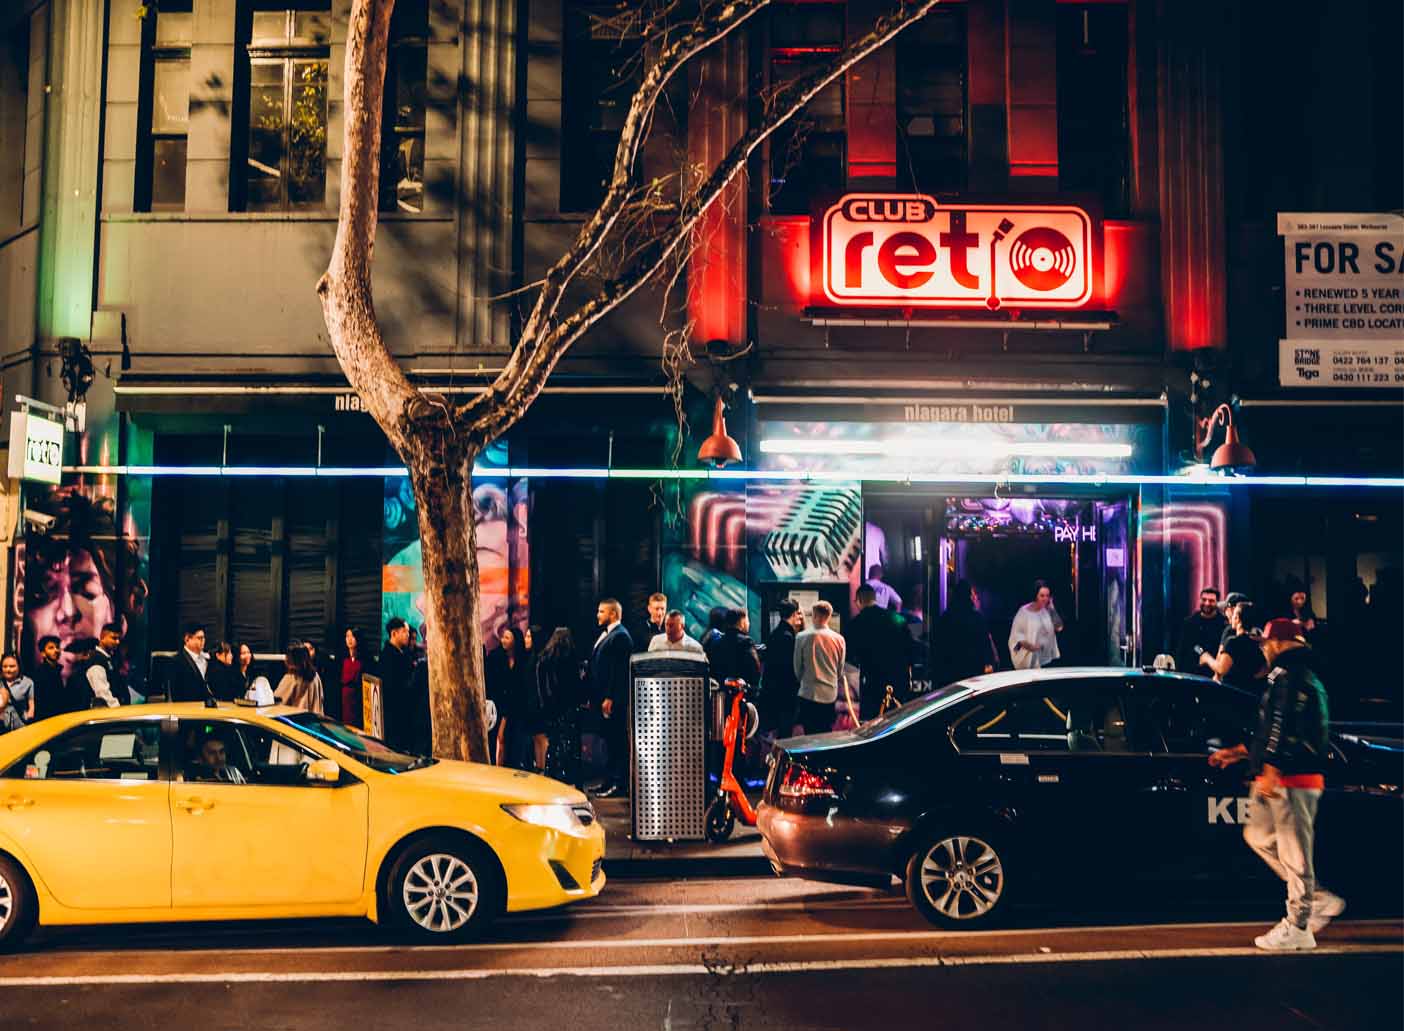 Club Retro Melbourne CBD City bar bars nightclub clubs club music dj late night throwback fun groups top hens (22)